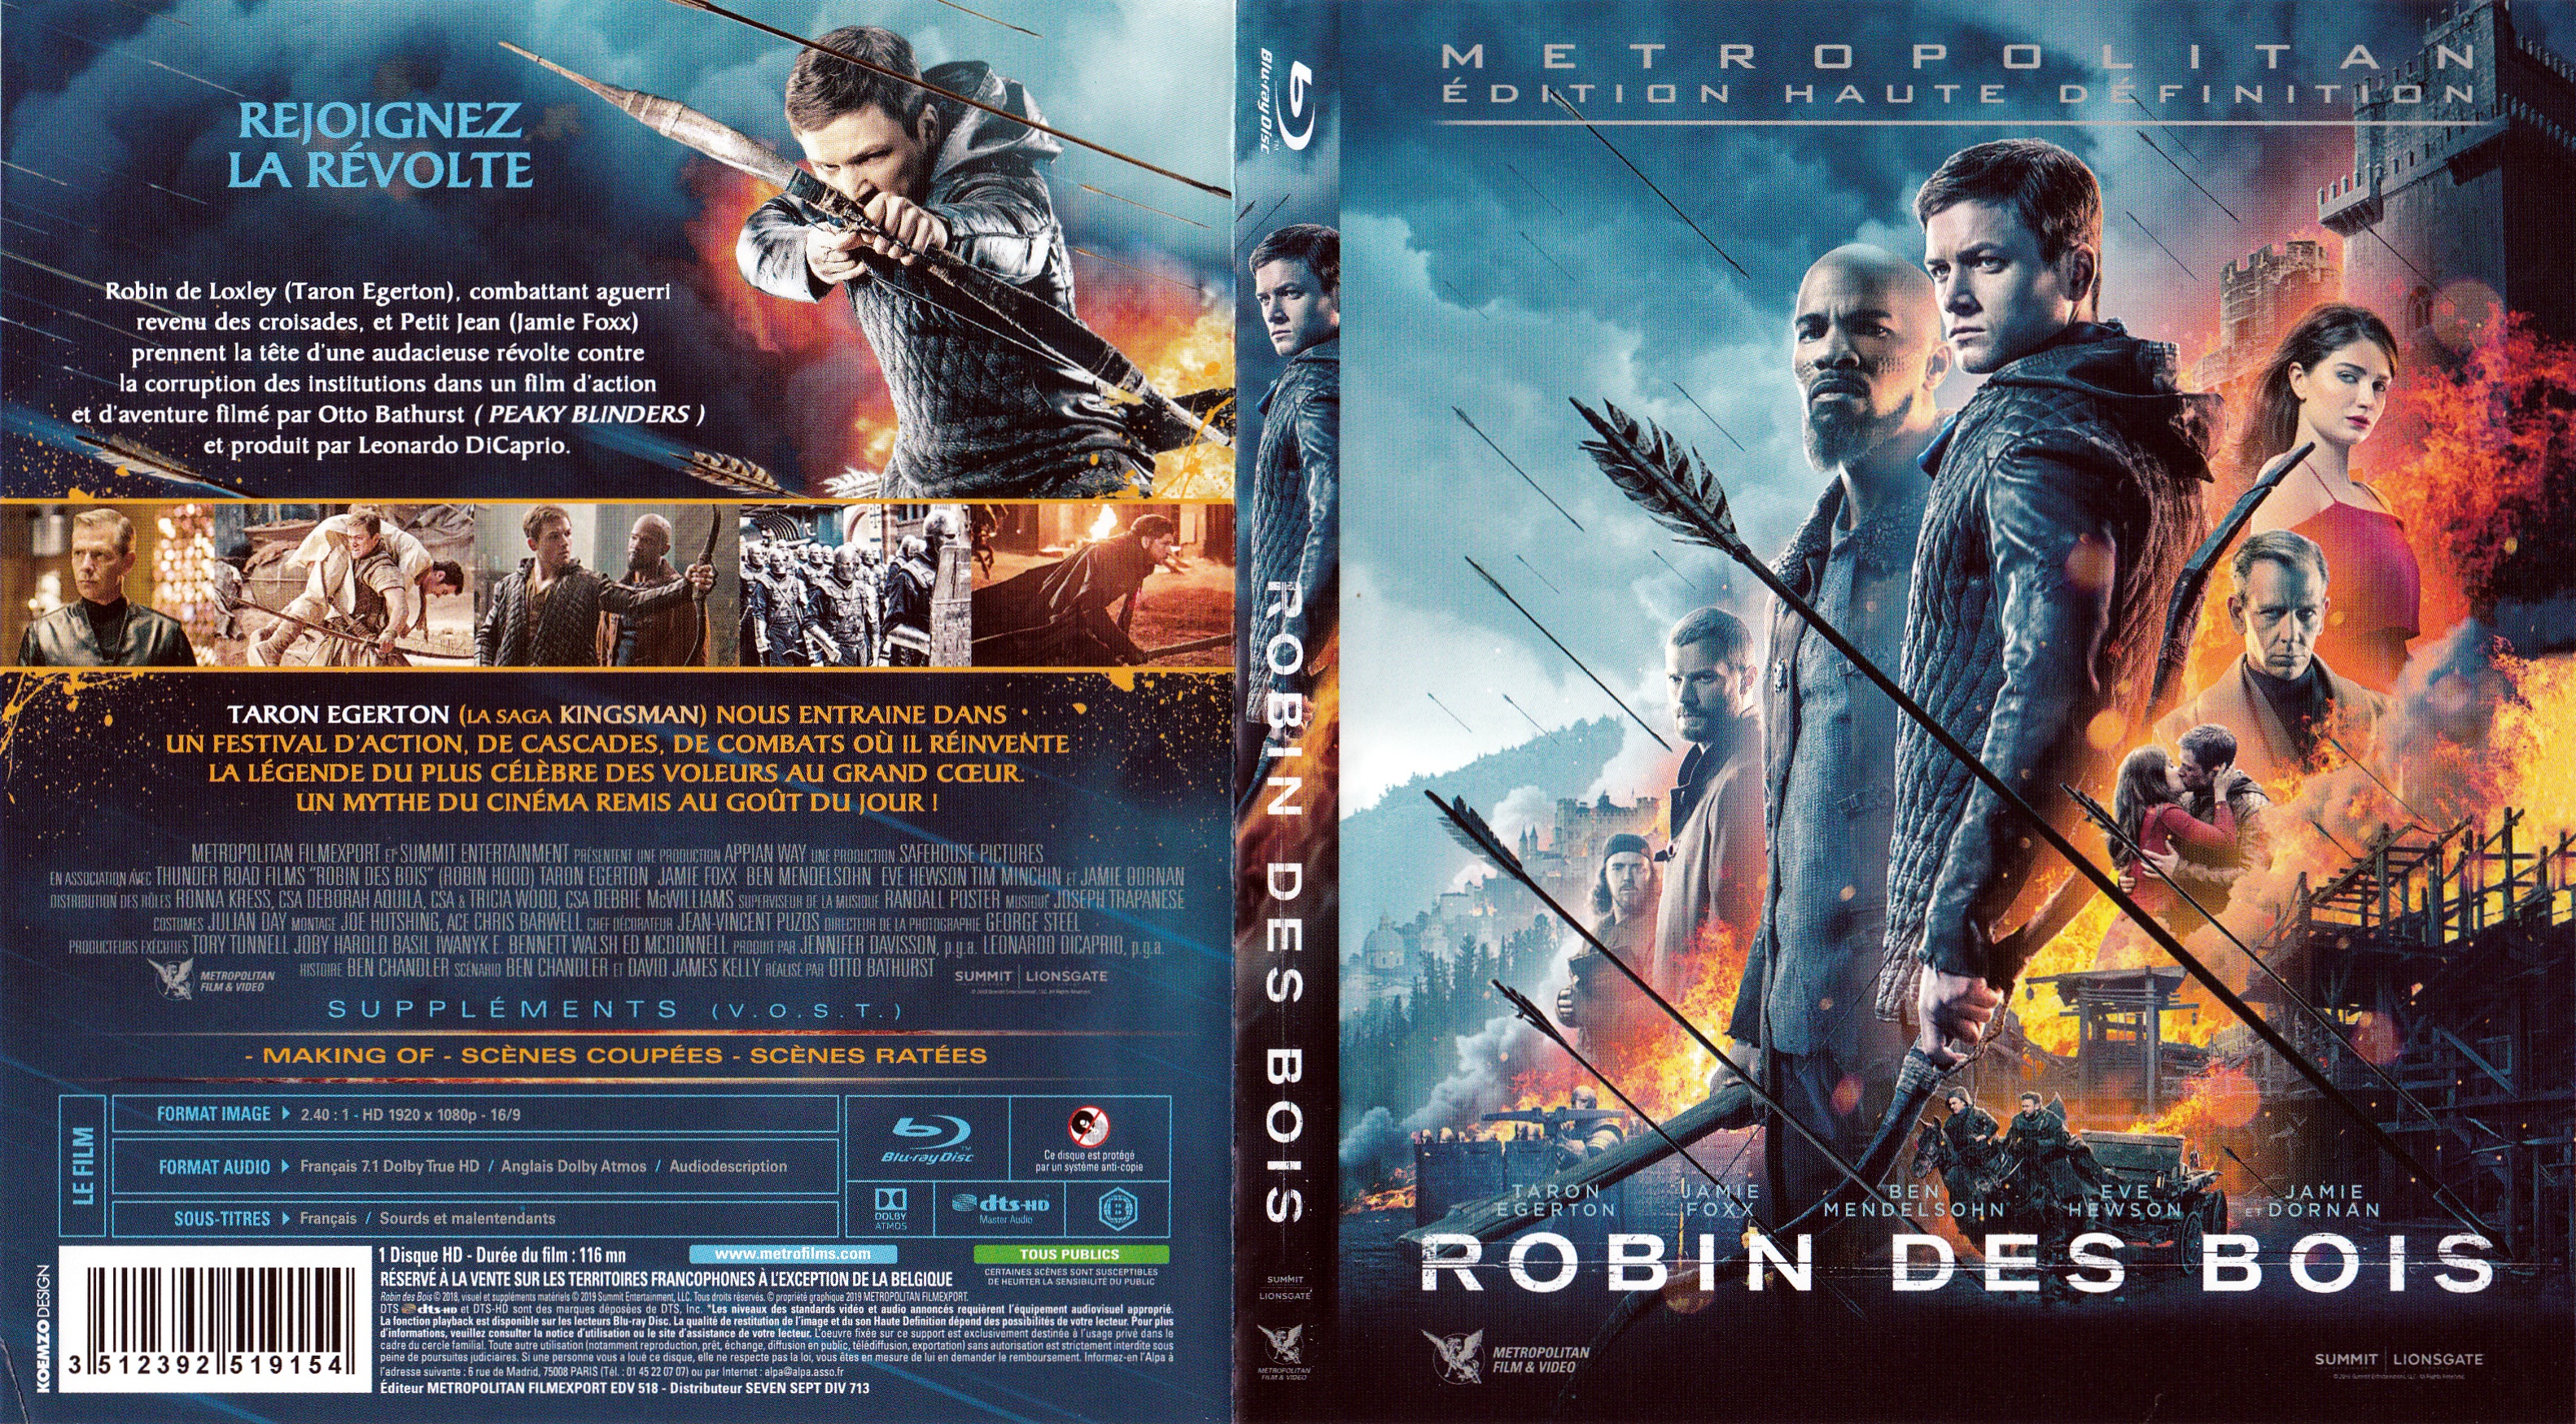 Jaquette DVD Robin des bois 2018 (BLU-RAY)